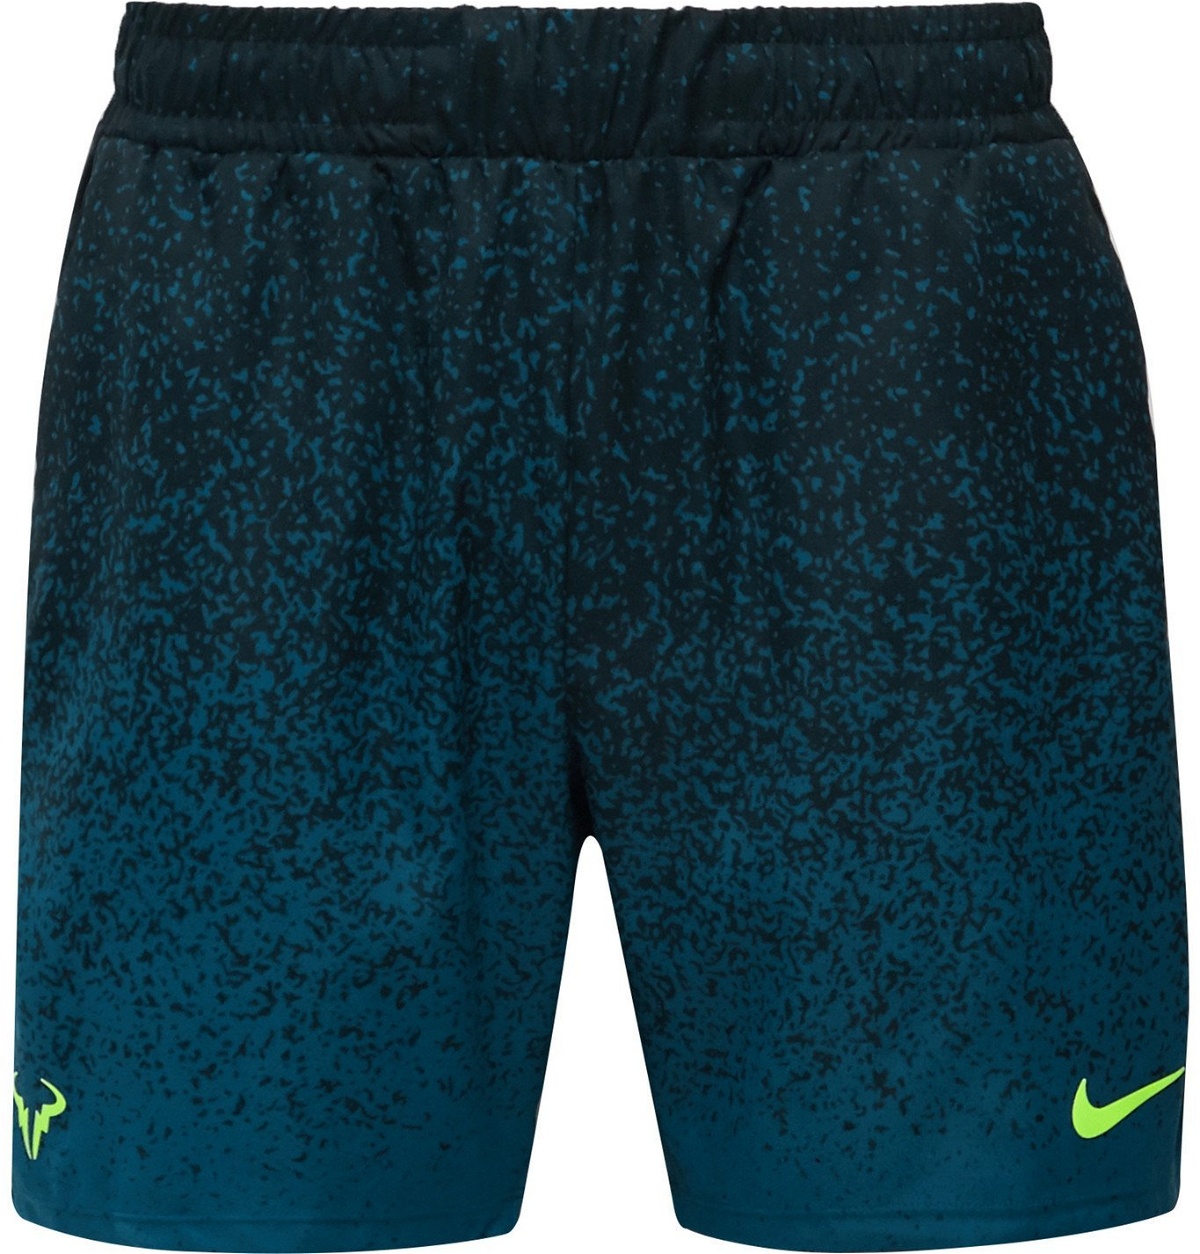 Nike Tennis - Rafa Appliquéd Dri-FIT Tennis Shorts - Black Nike Tennis